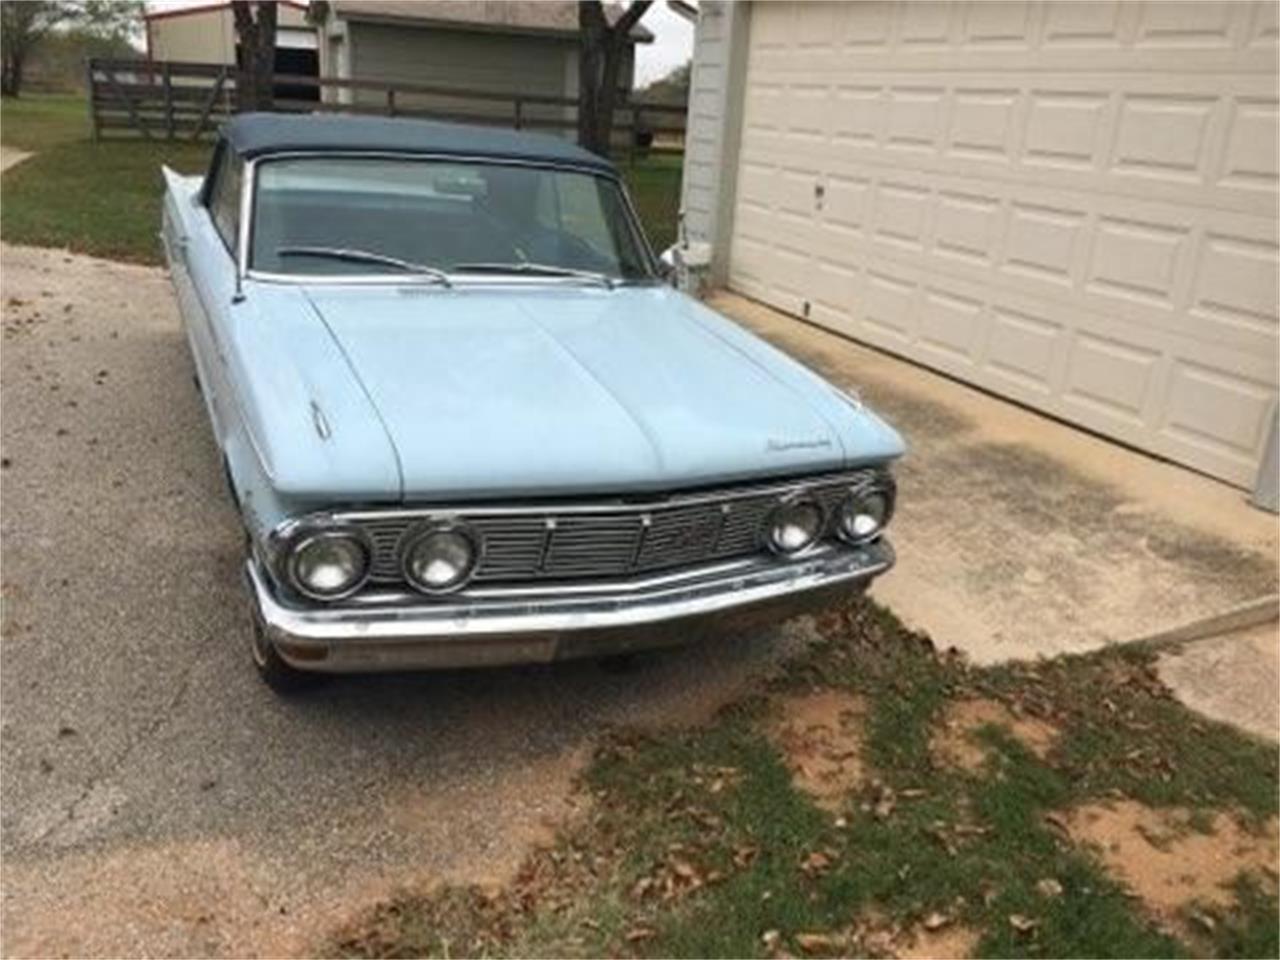 For Sale: 1963 Mercury Comet in Cadillac, Michigan for sale in Cadillac, MI